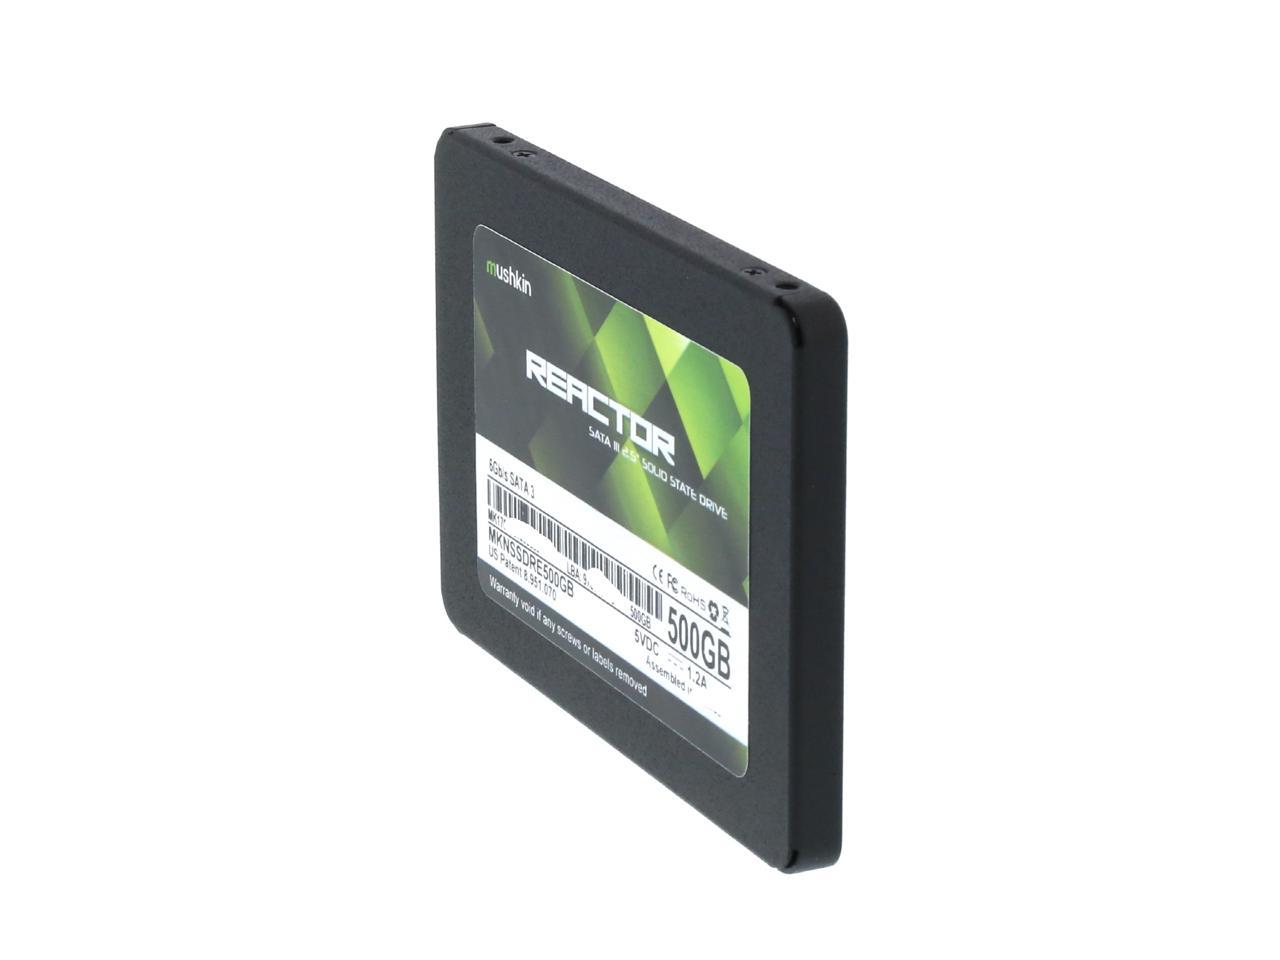 Mushkin Enhanced Reactor 2.5 500GB SATA III MLC Internal Solid State Drive  (SSD) MKNSSDRE500GB 